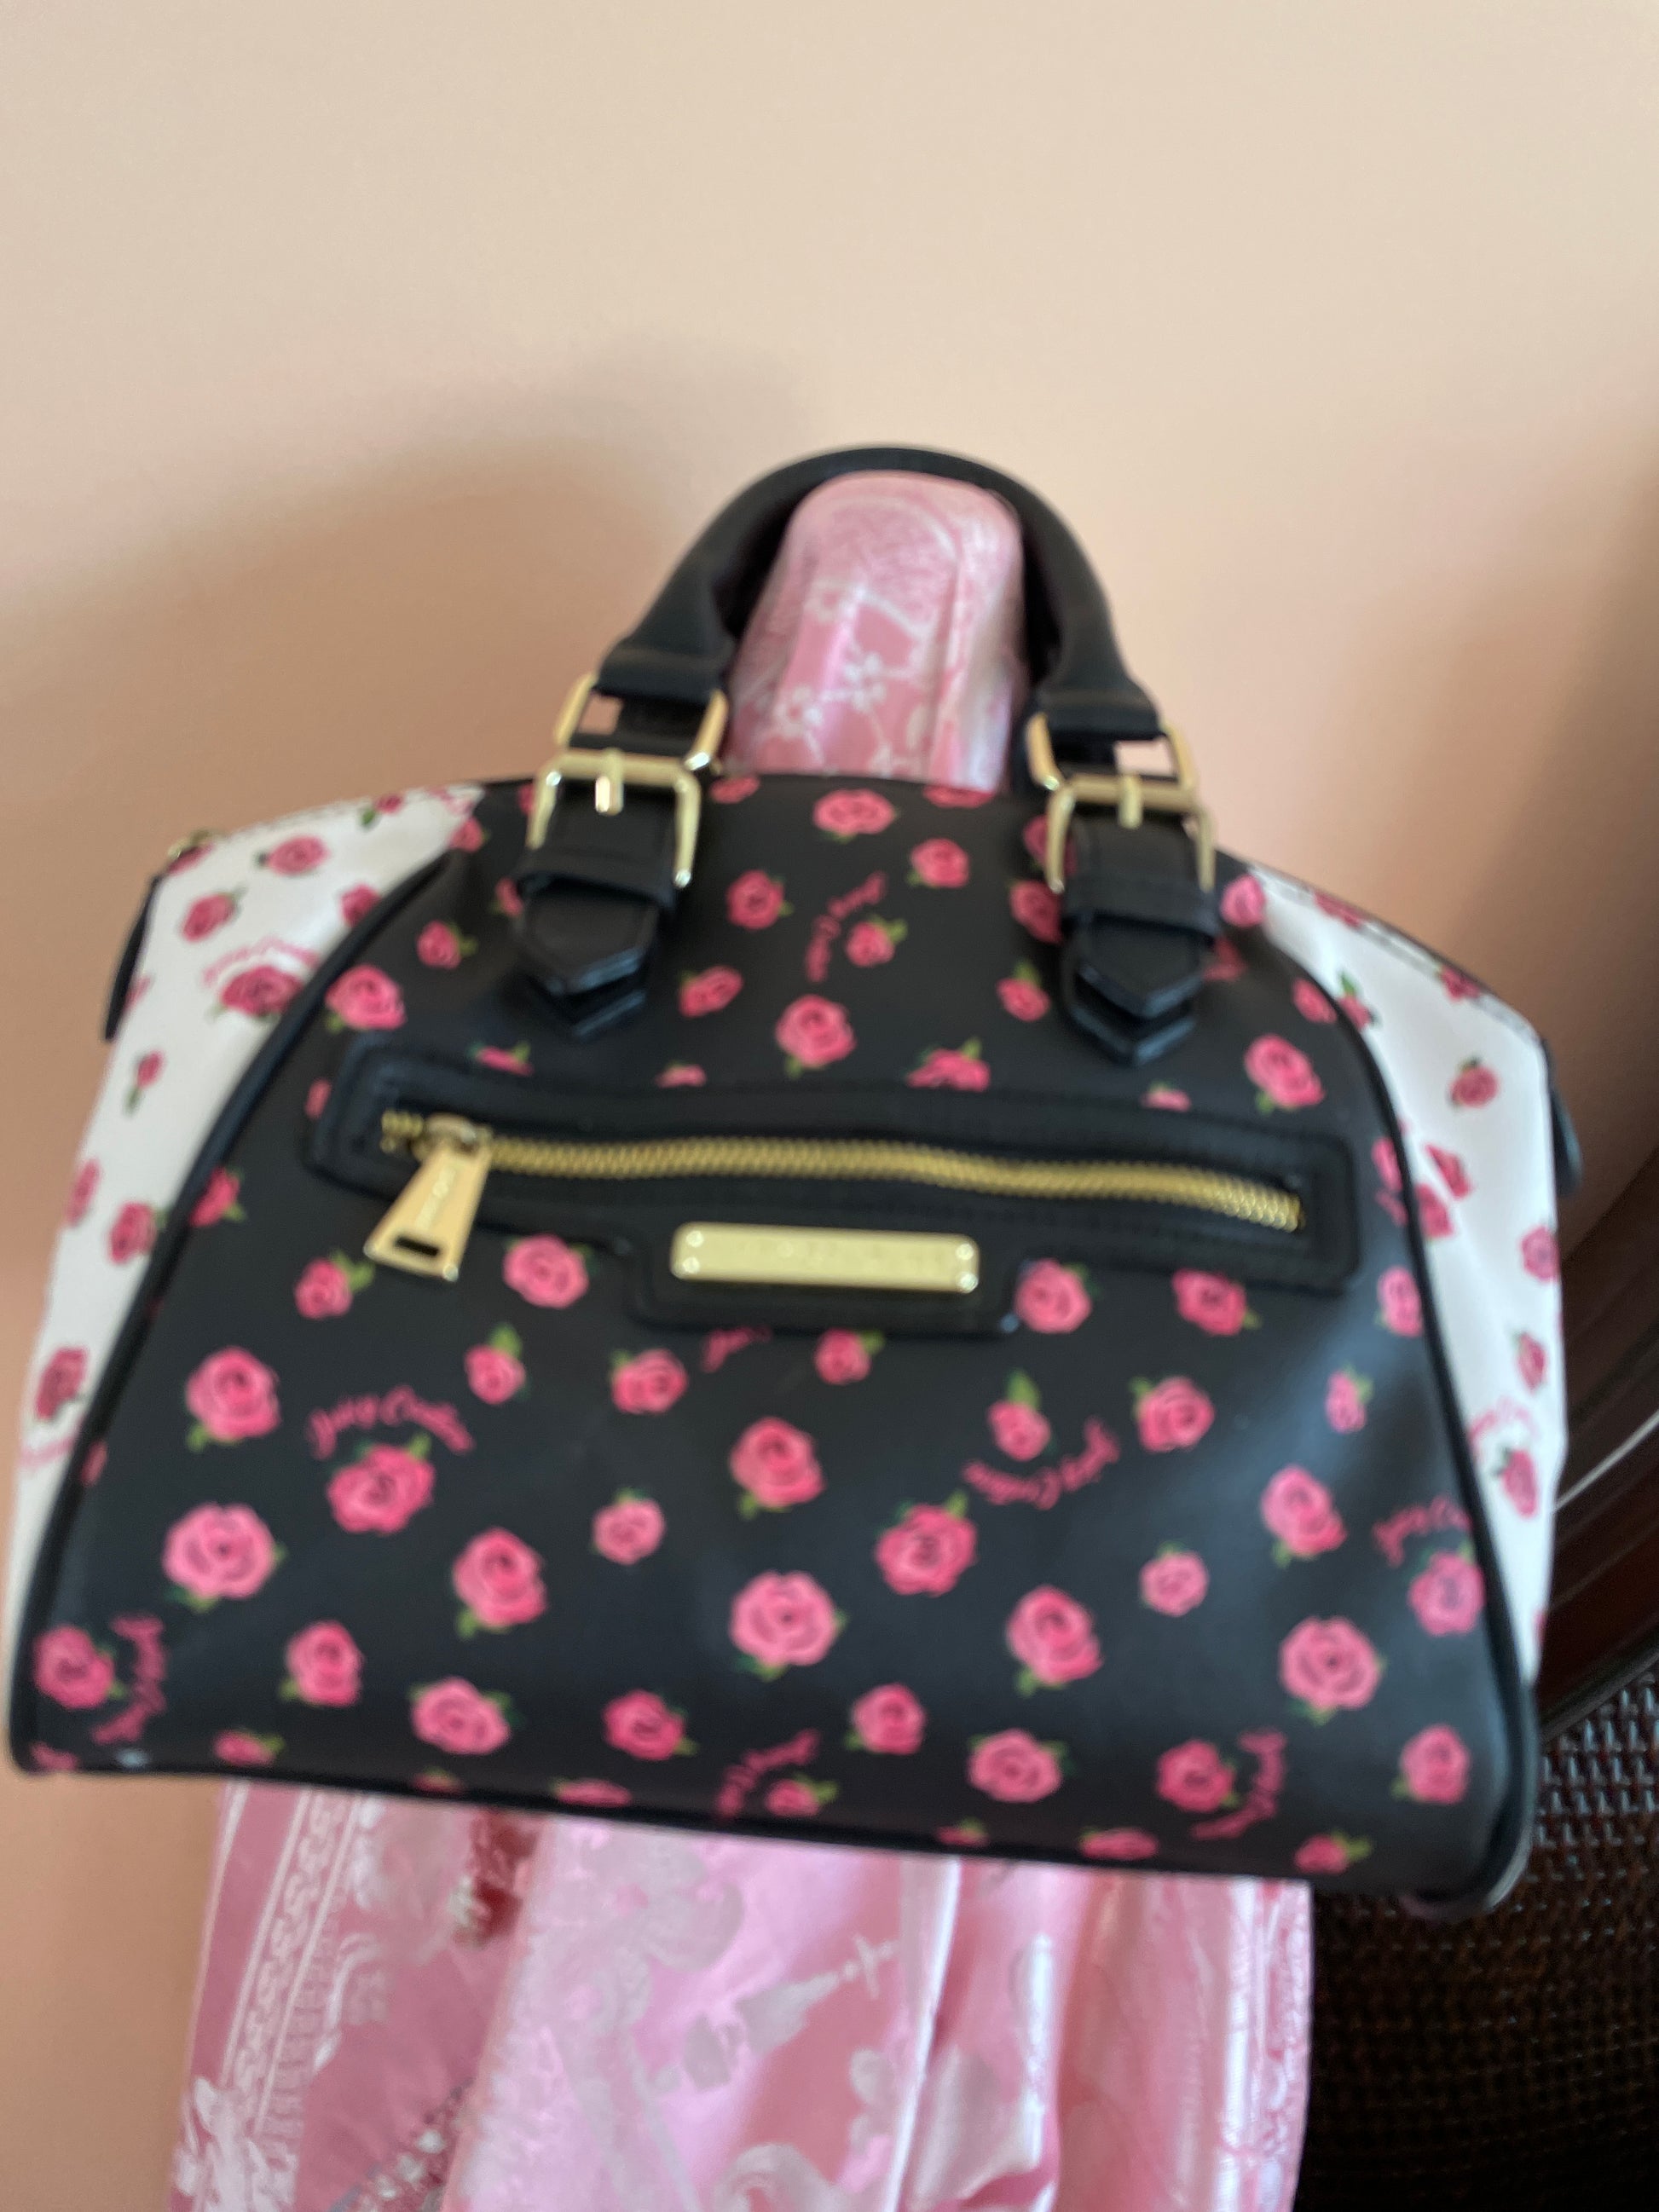  Juicy Couture Black Rose Floral Design Faux Leather Handbag